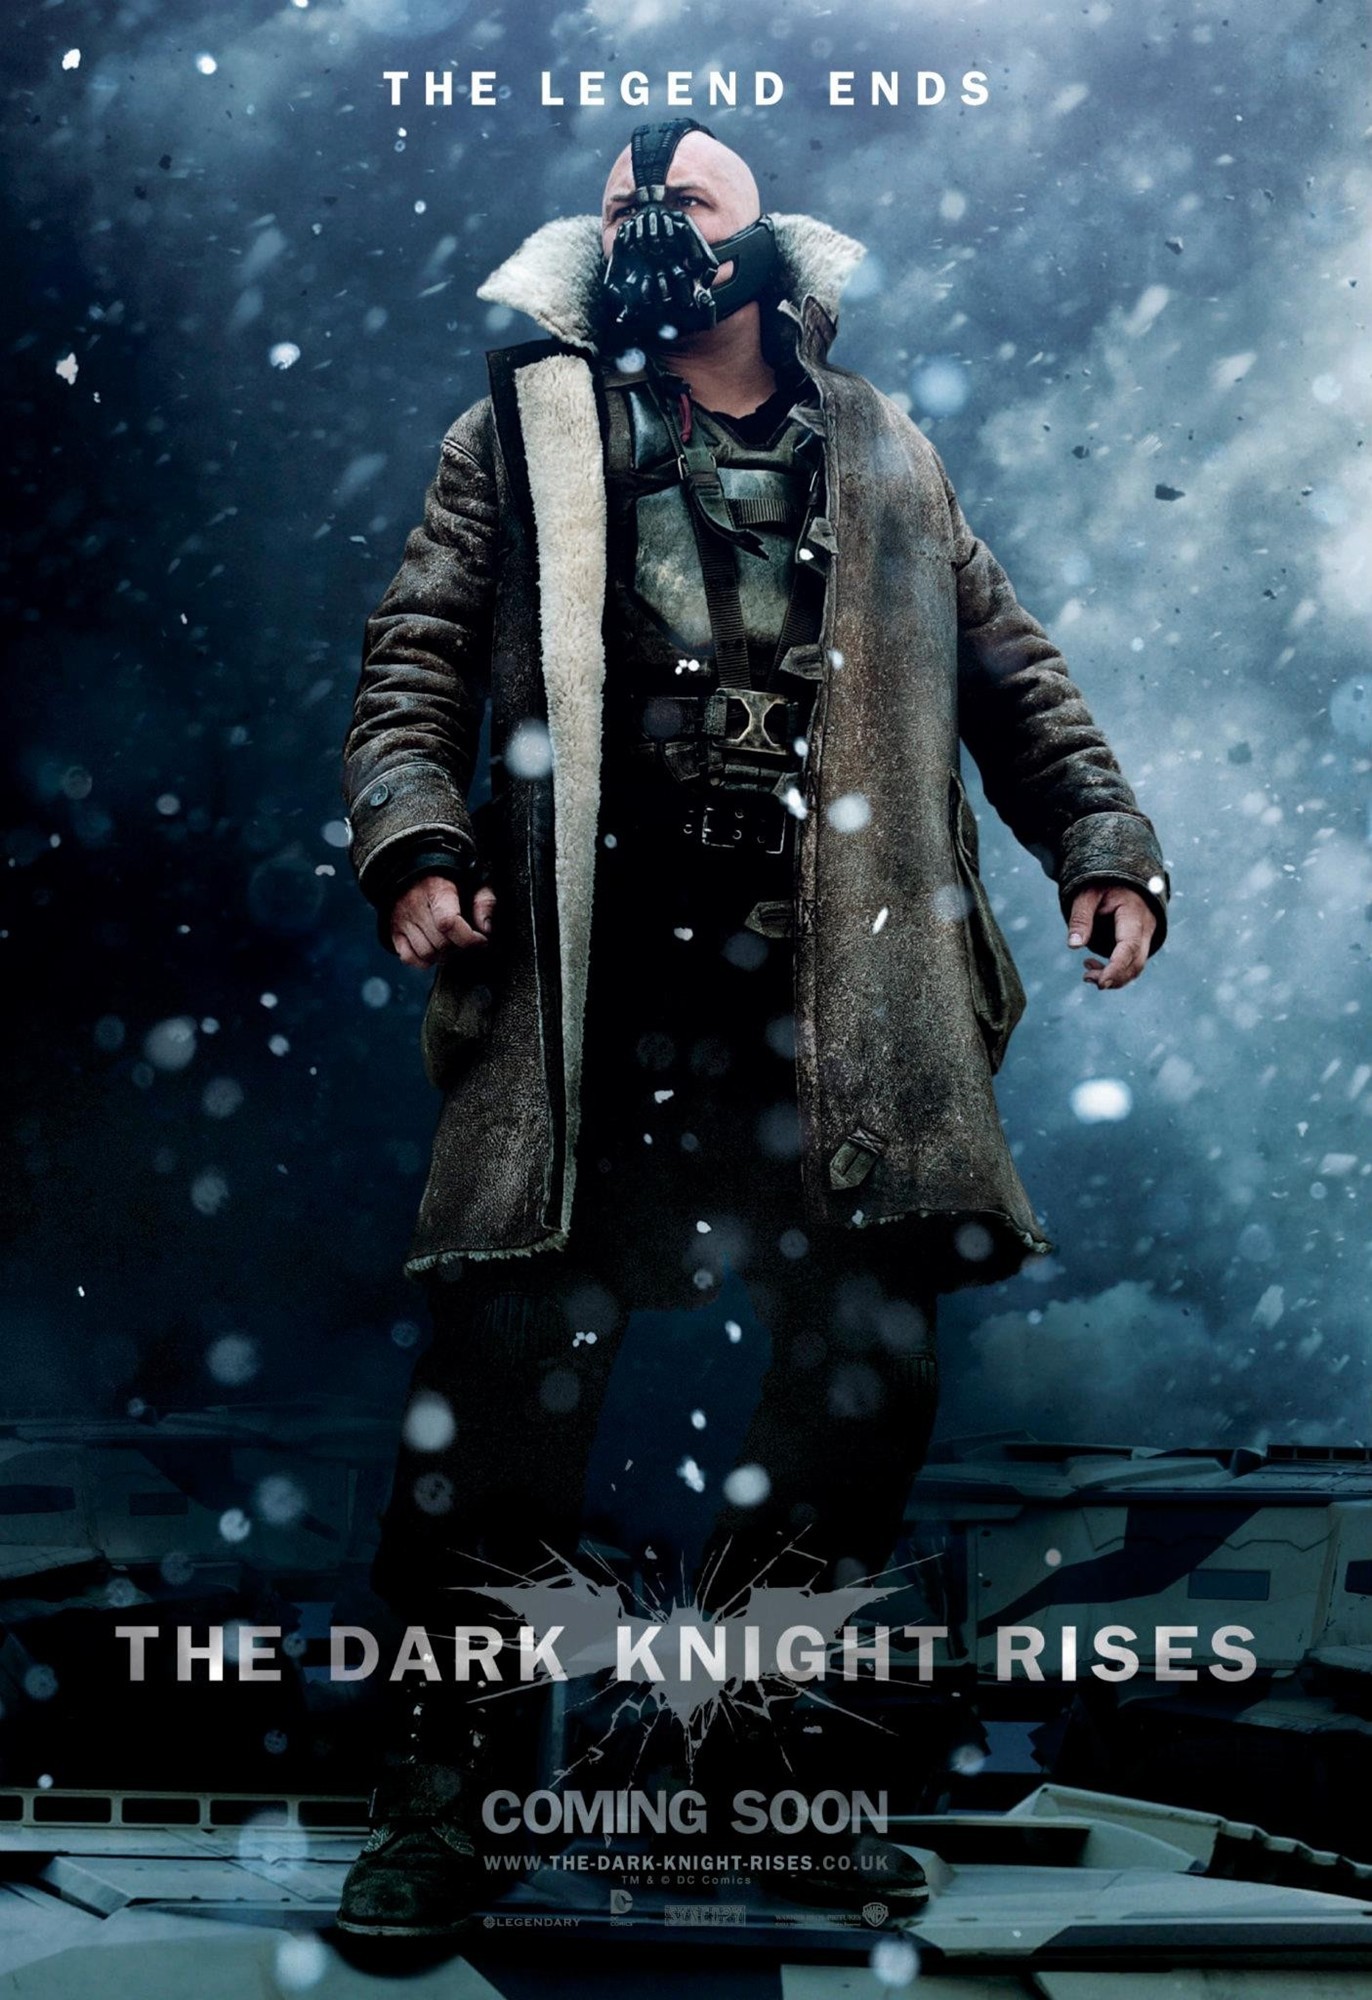 Bane Movie Poster